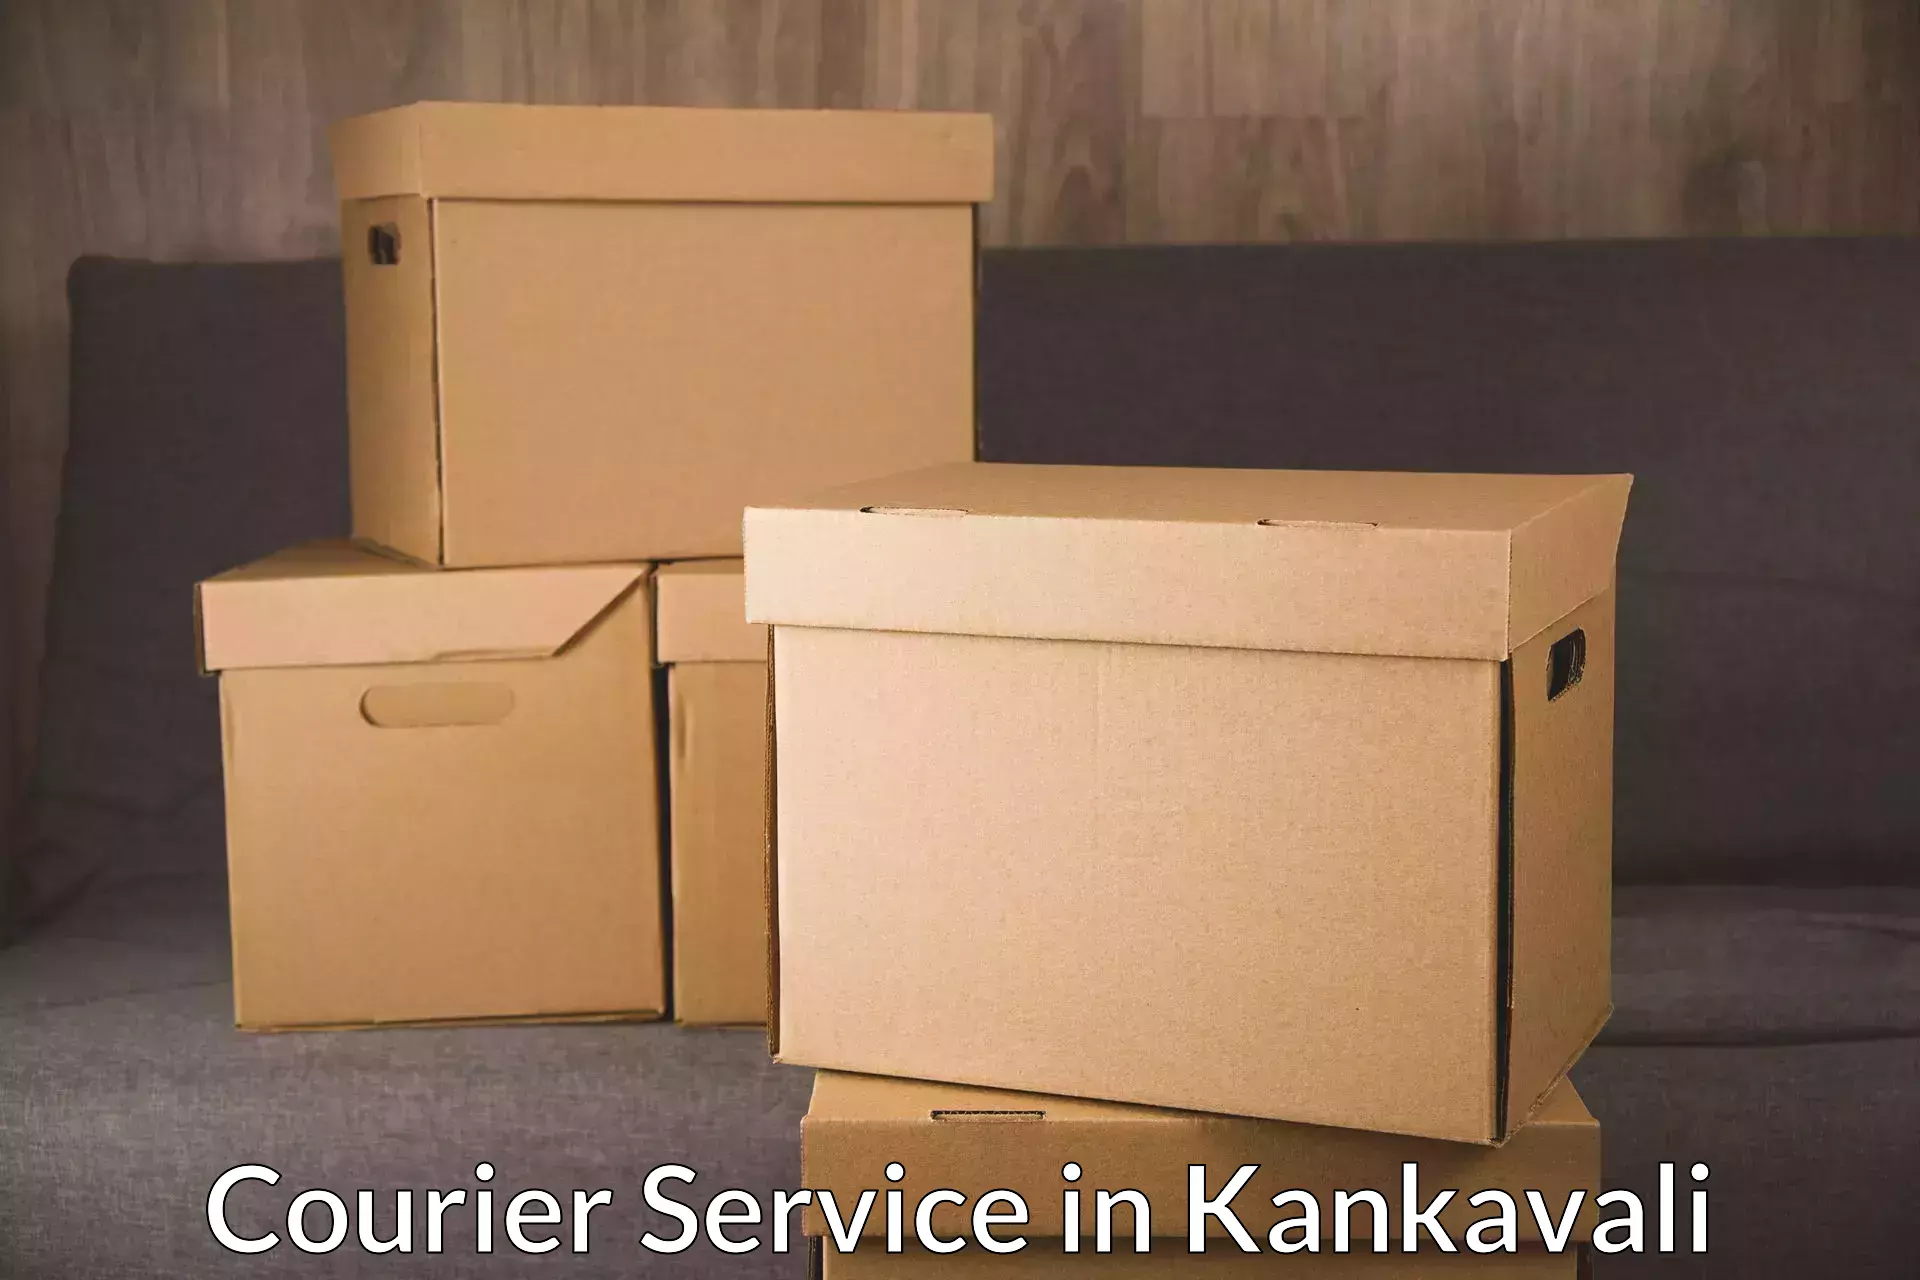 Customer-centric shipping in Kankavali